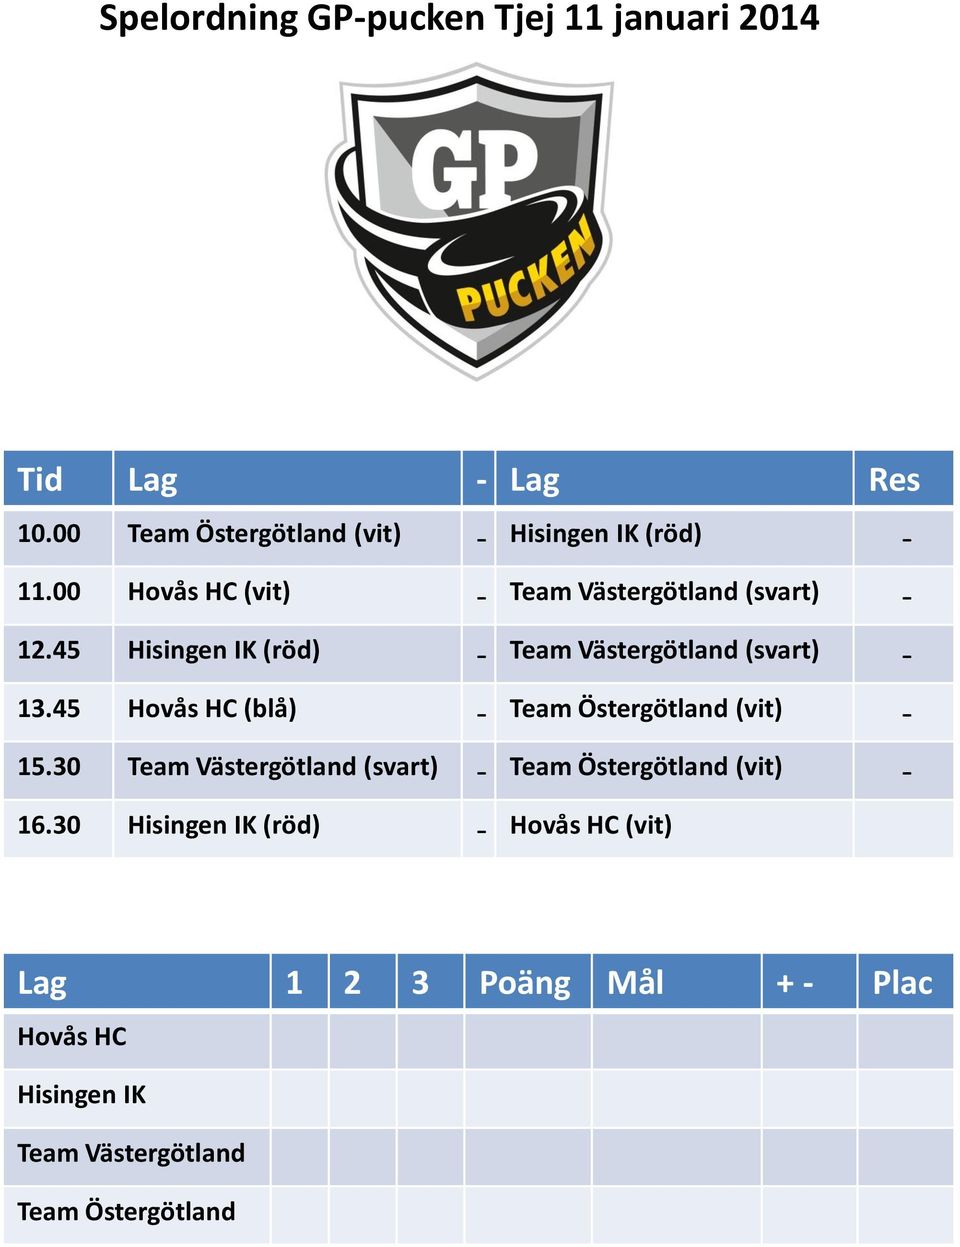 45 Hisingen IK (röd) - Team Västergötland (svart) - 13.45 Hovås HC (blå) - Team Östergötland (vit) - 15.